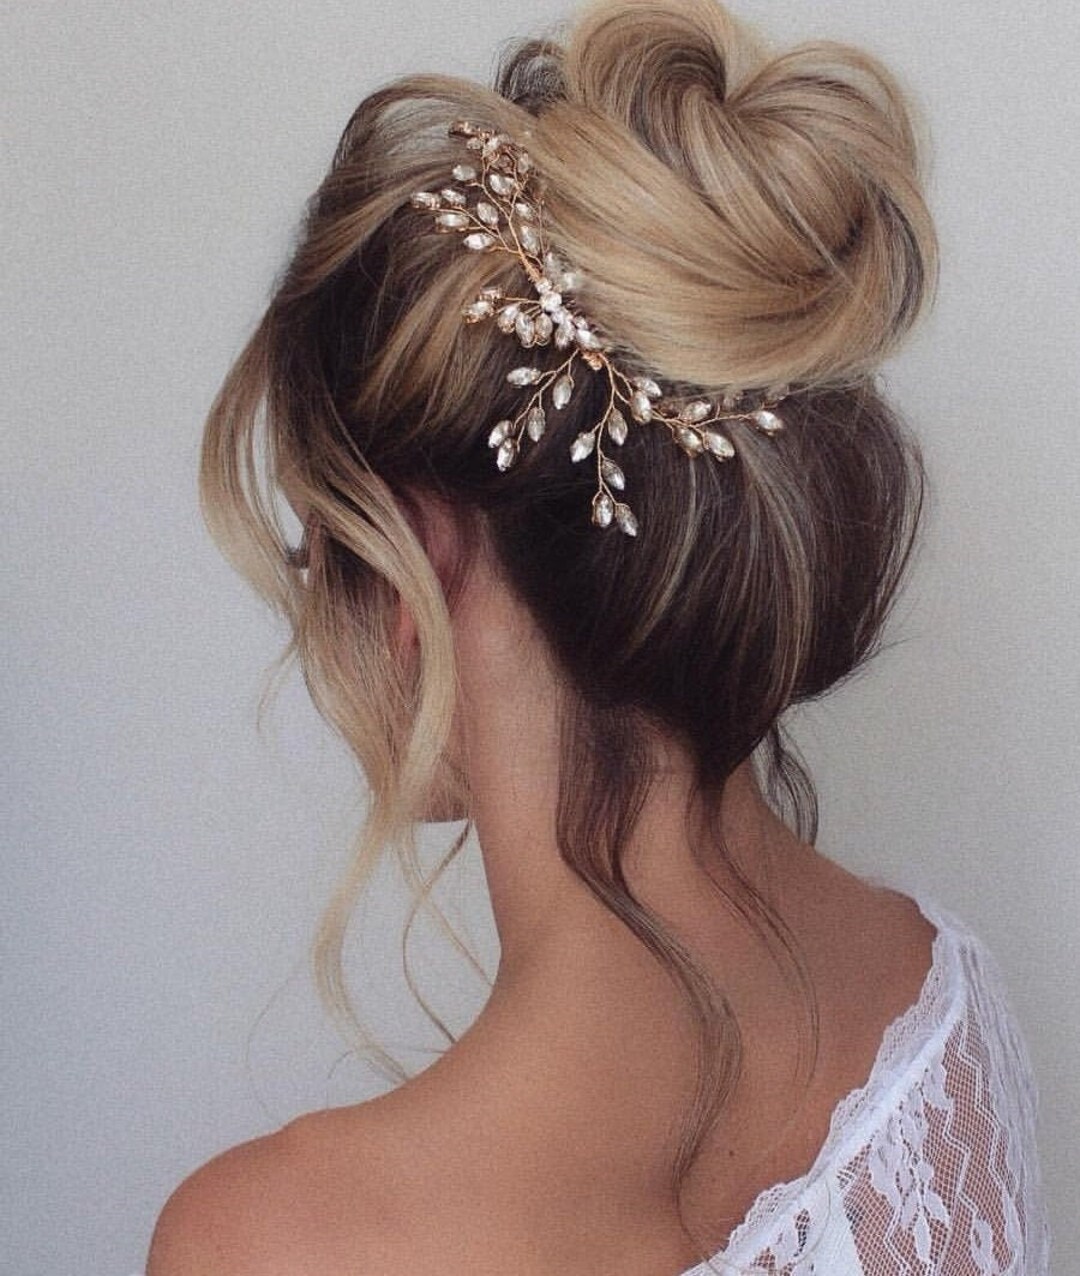 Bridalglamourandmore Pearl Hair Accessories Bridal Pearl Comb Wedding Hair Accessories Pearl Hair Pins Set